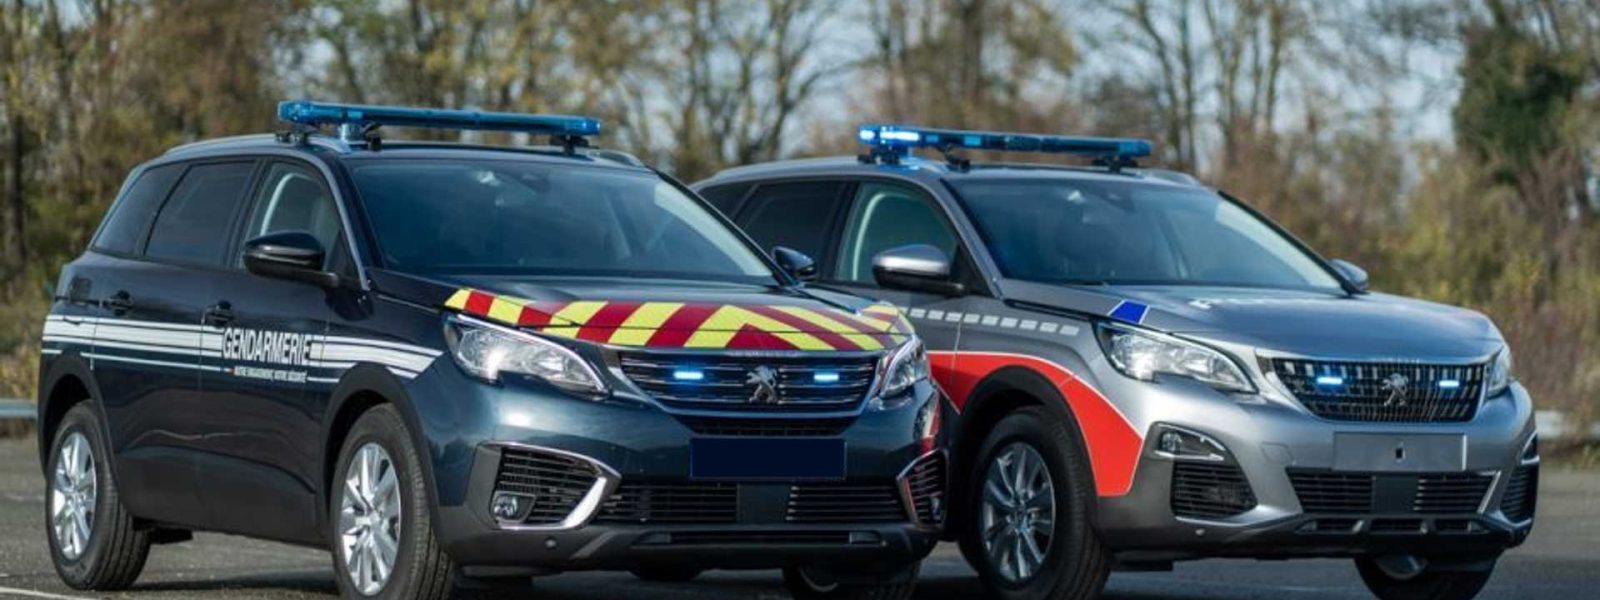 peugeot-5008-police-gendarmerie (13)